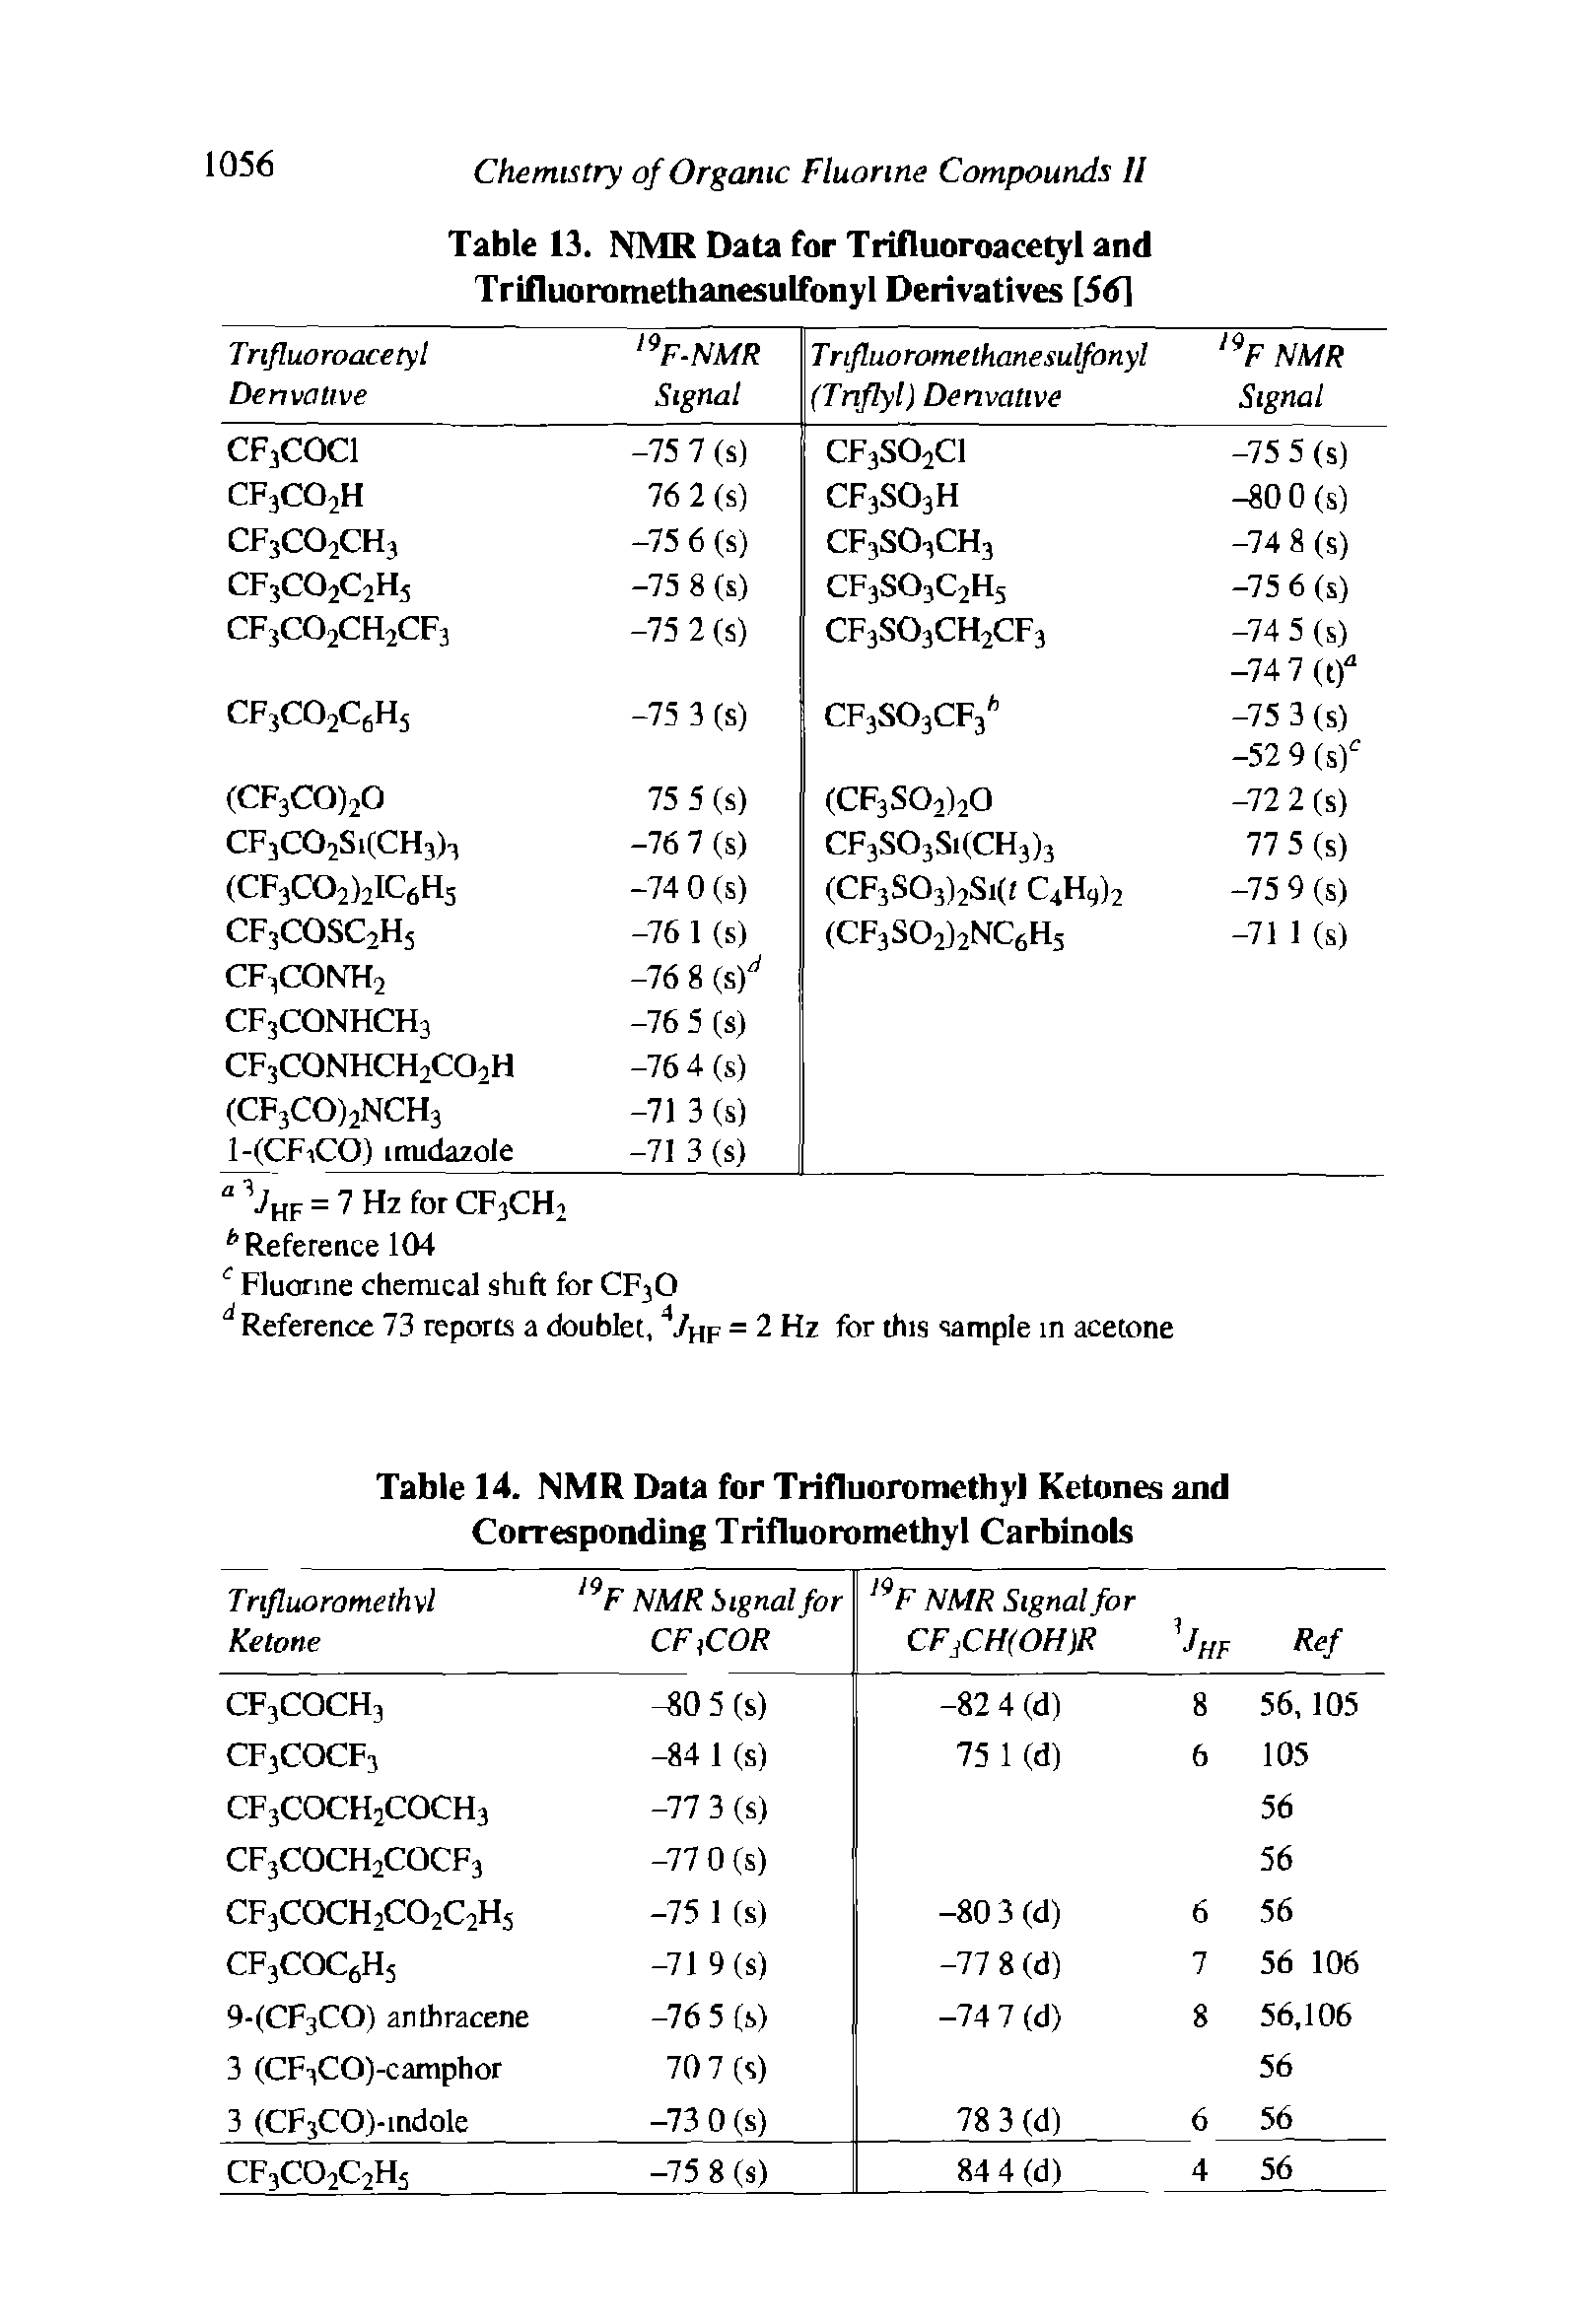 Table 14. NMR Data for Trifluoromethyl Ketones and Corresponding Trifluoromethyl Carbinols...